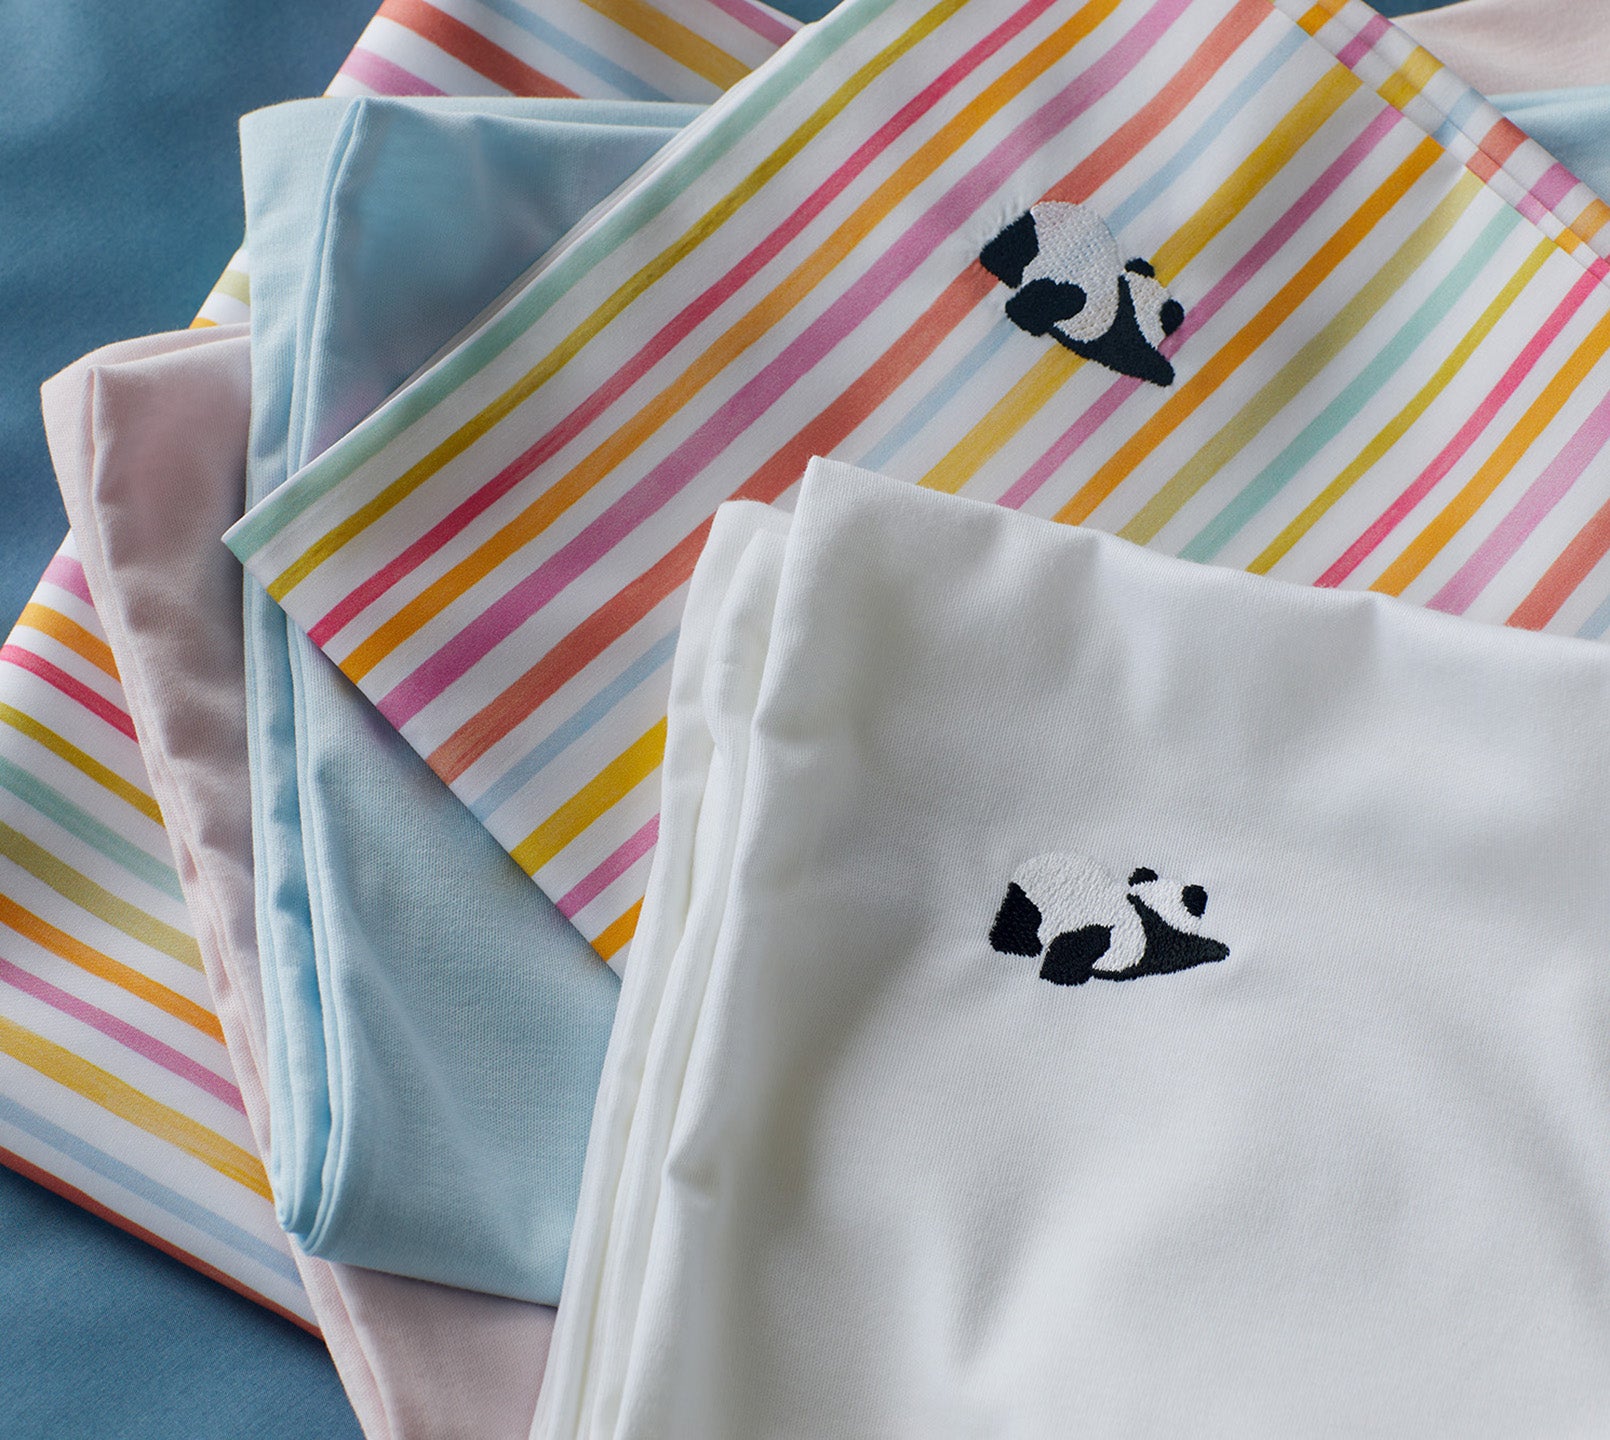 Mako-Batist Kinderbettwaesche Lucky Stripe in Regenbogen Streifen Pandabärstickmotiv Mix